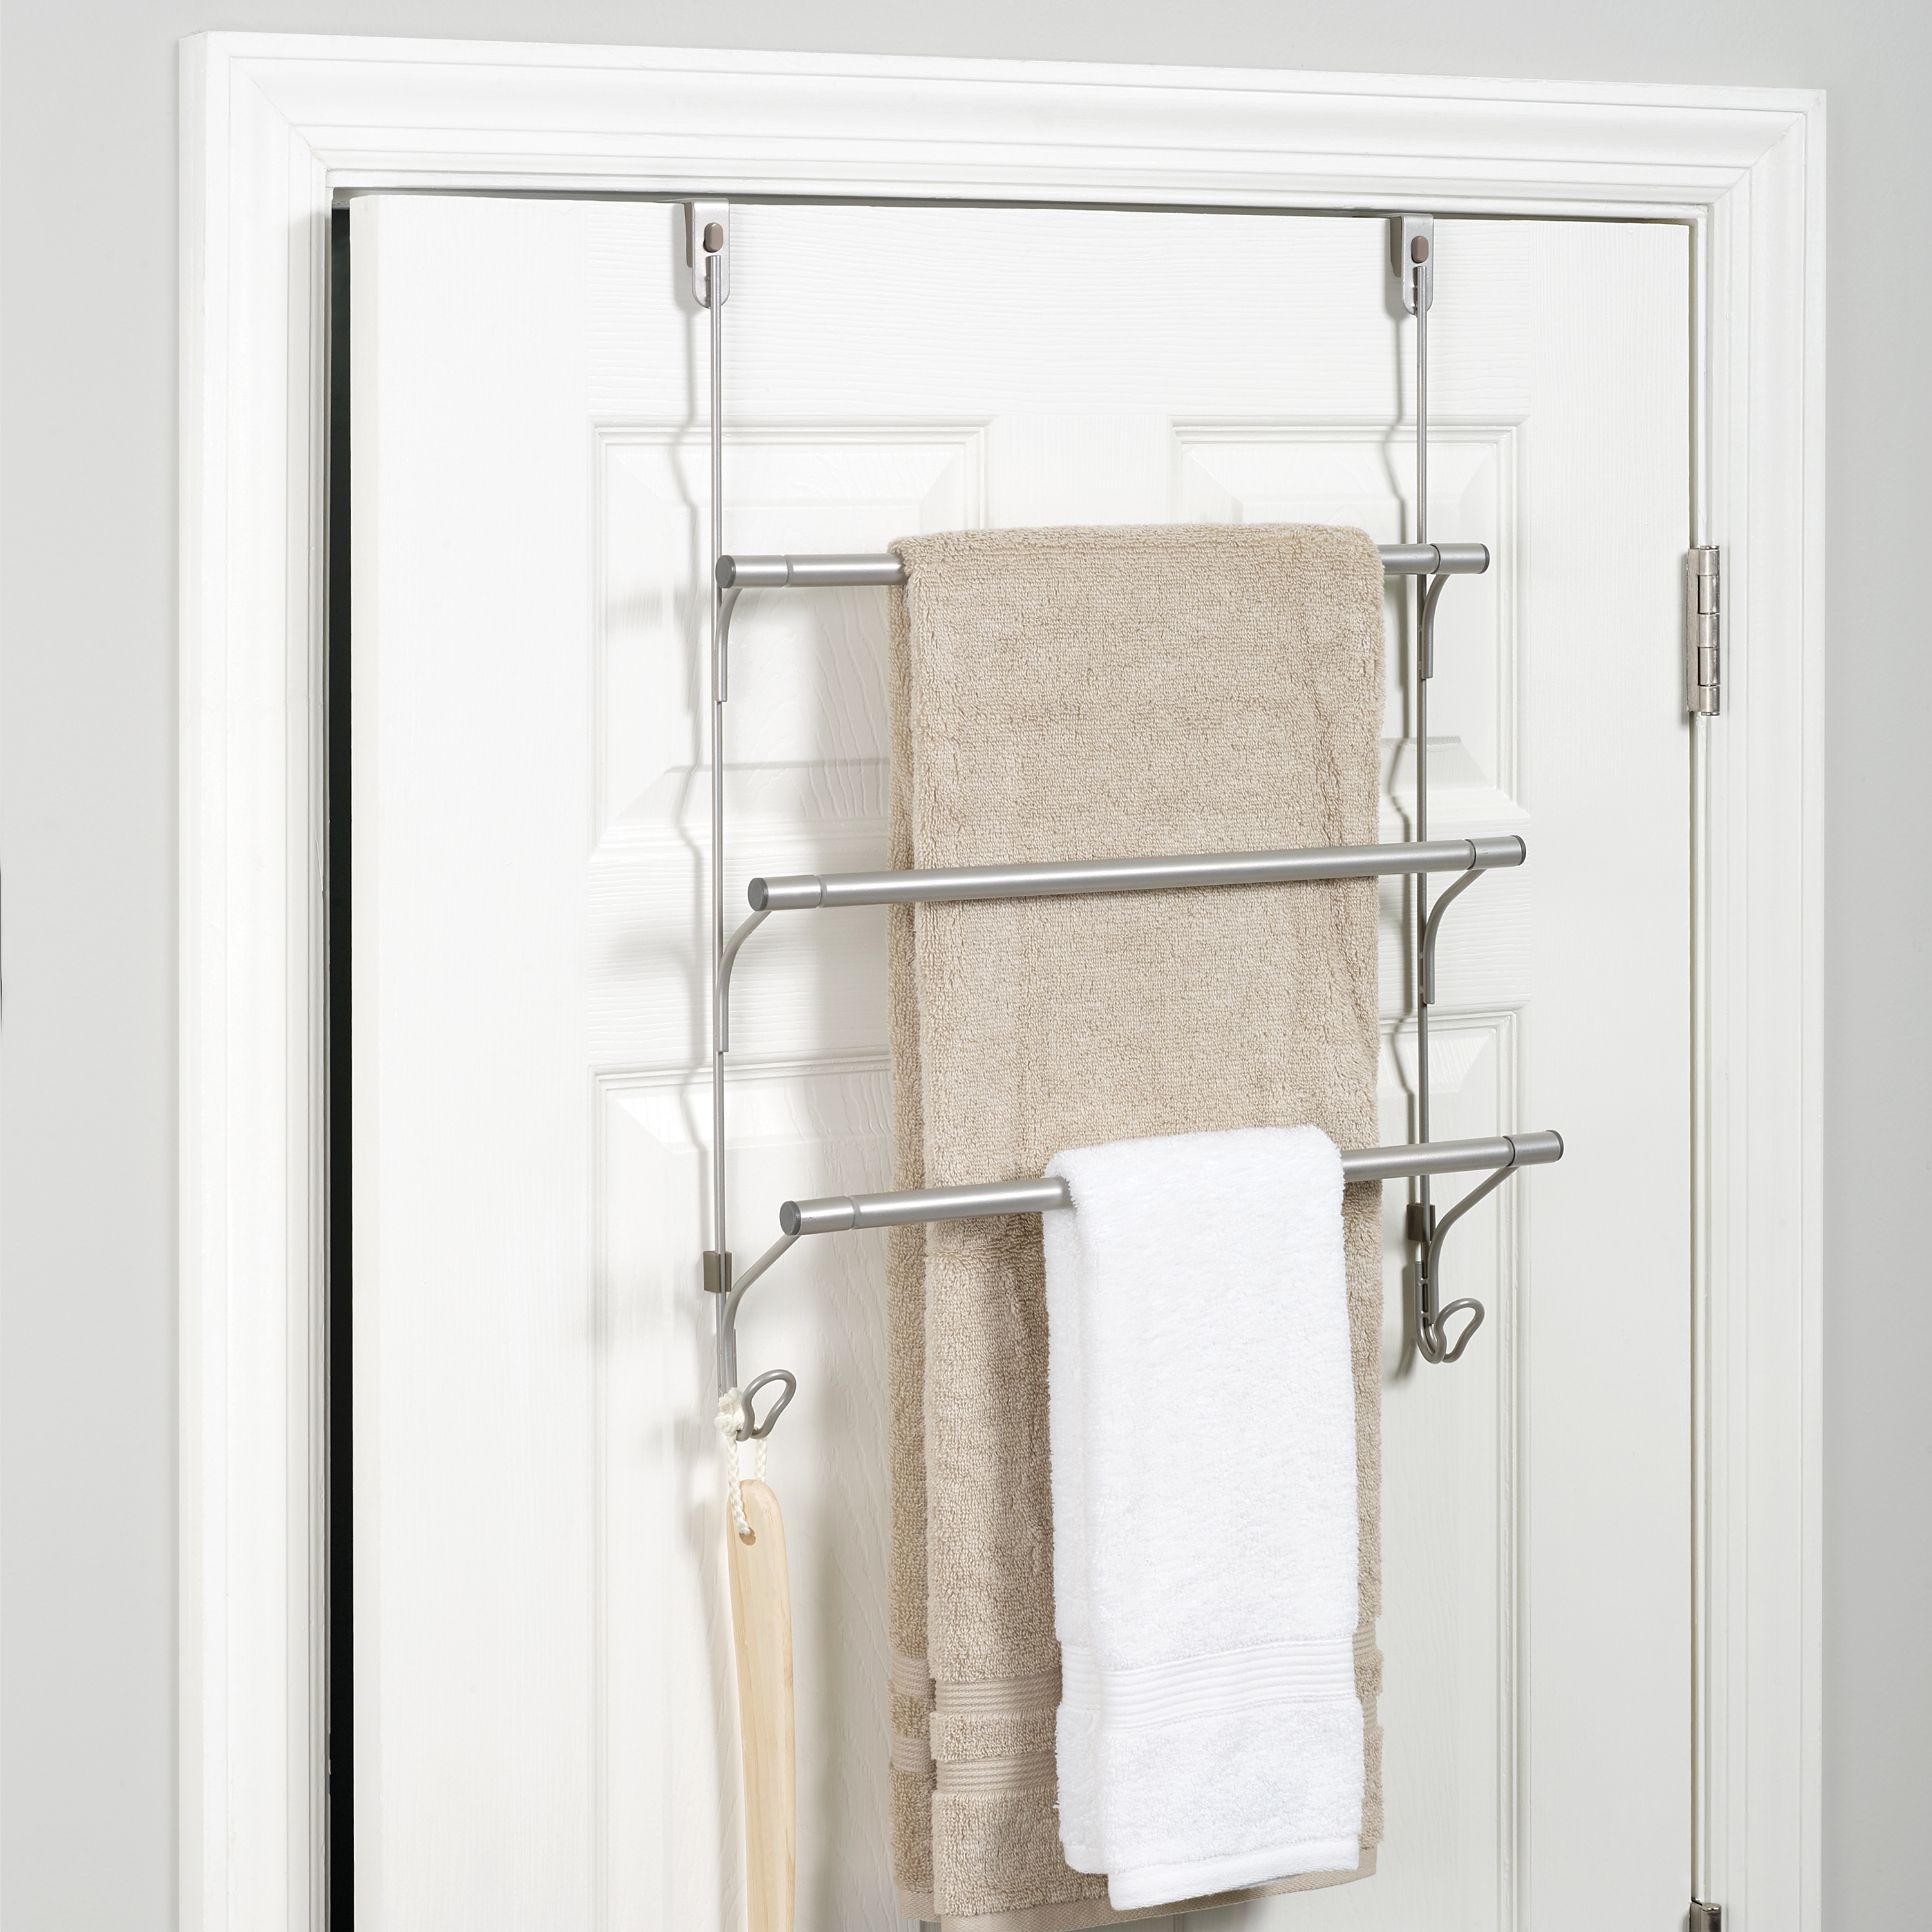 Mainstays SnugFit Over-the-Door 3-Tier Towel Bar with 2 Hooks, Satin Nickel - image 1 of 8